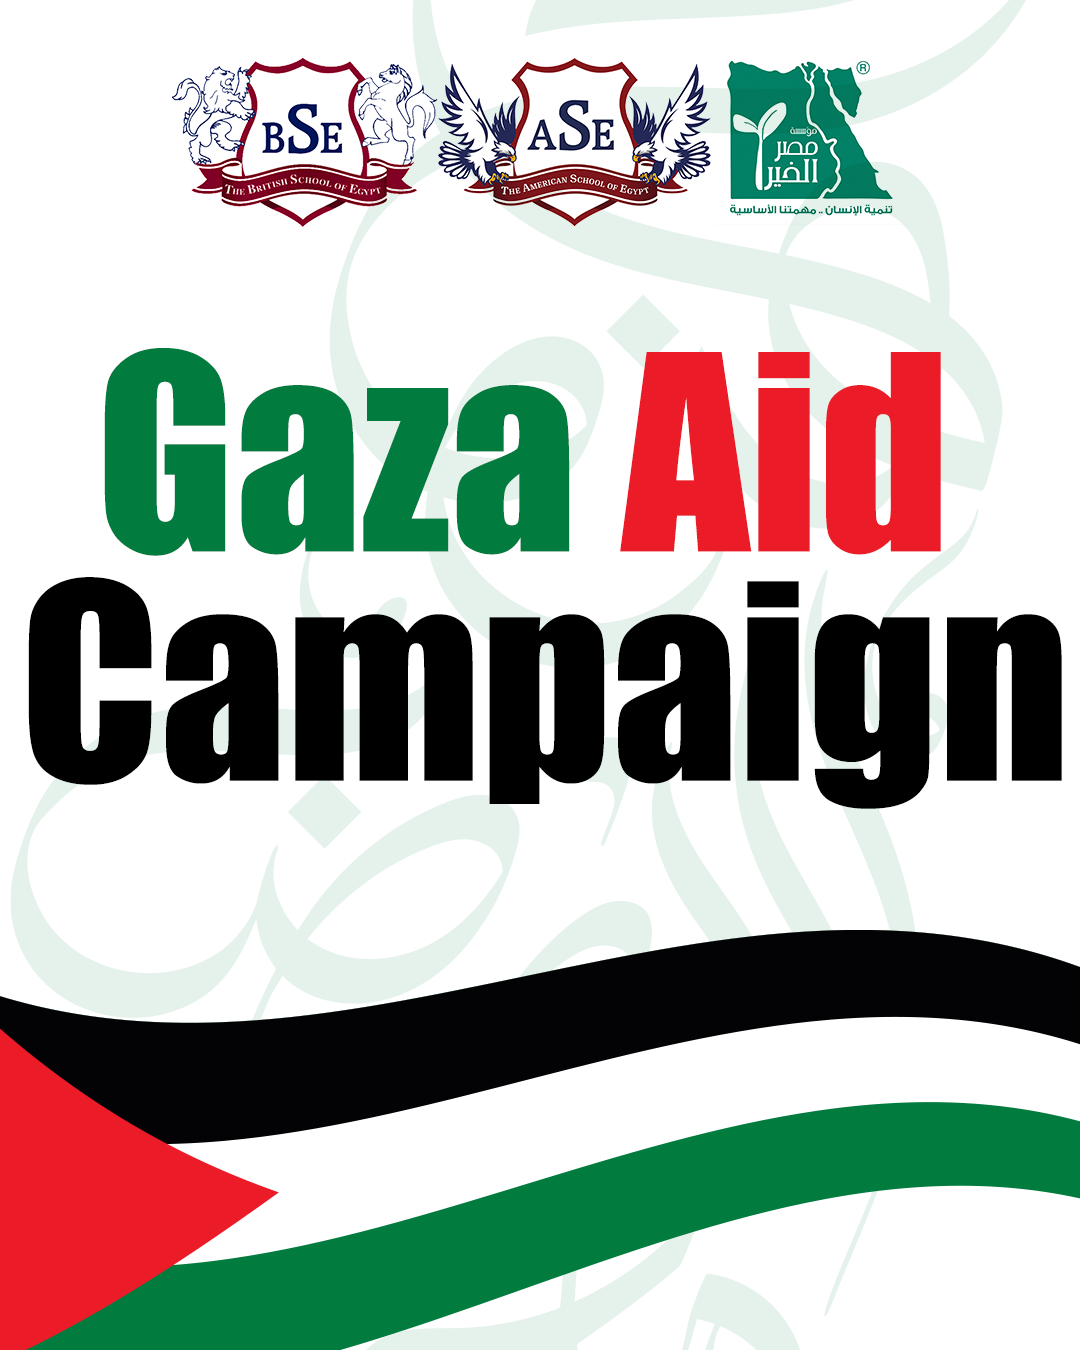 Help us support Gaza!